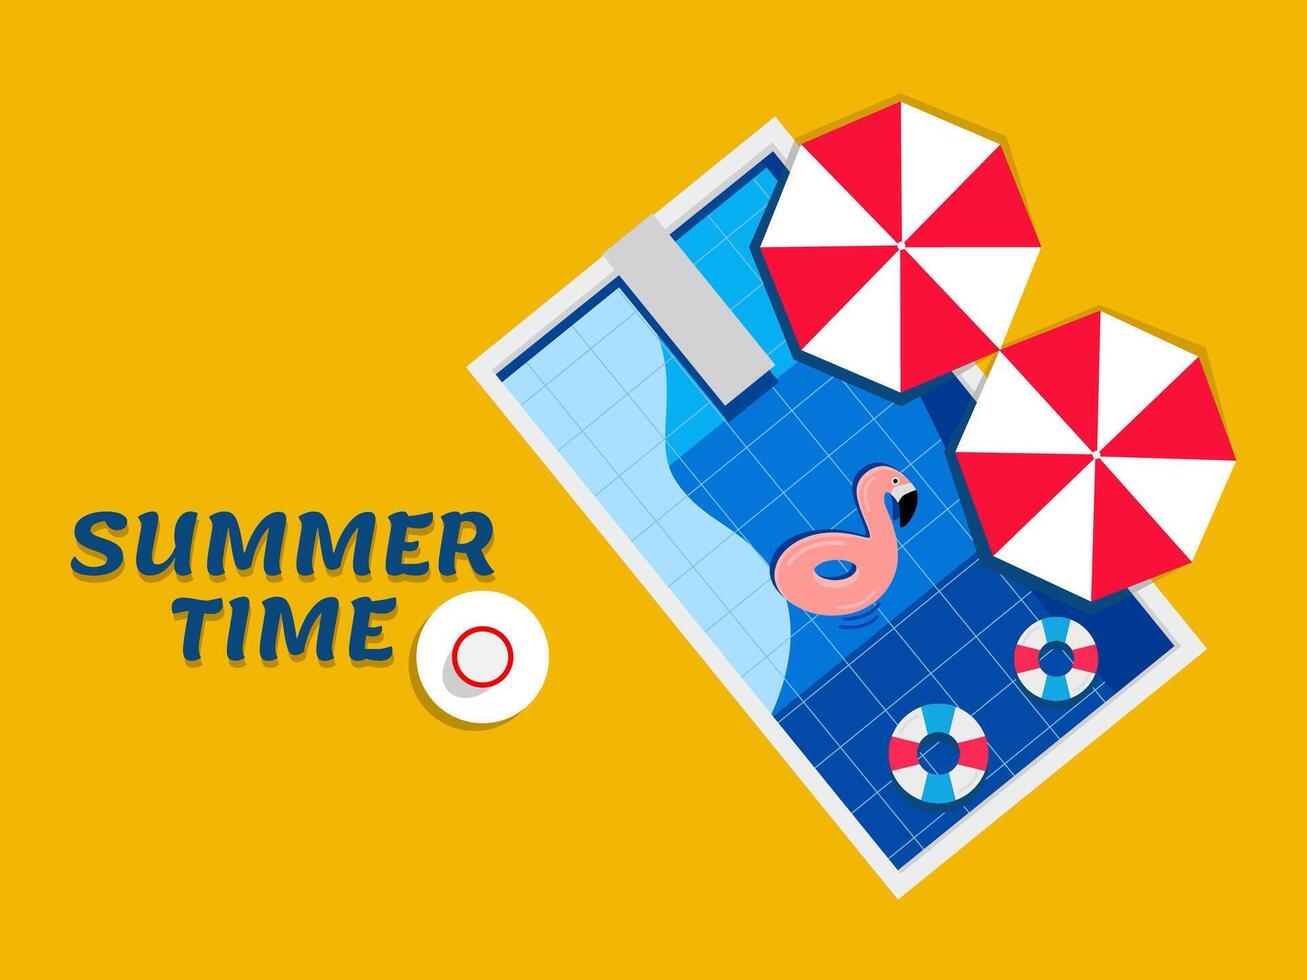 verano hora con nadando piscina. verano estacional fondo, bandera, folleto, tarjeta o invitación. vector